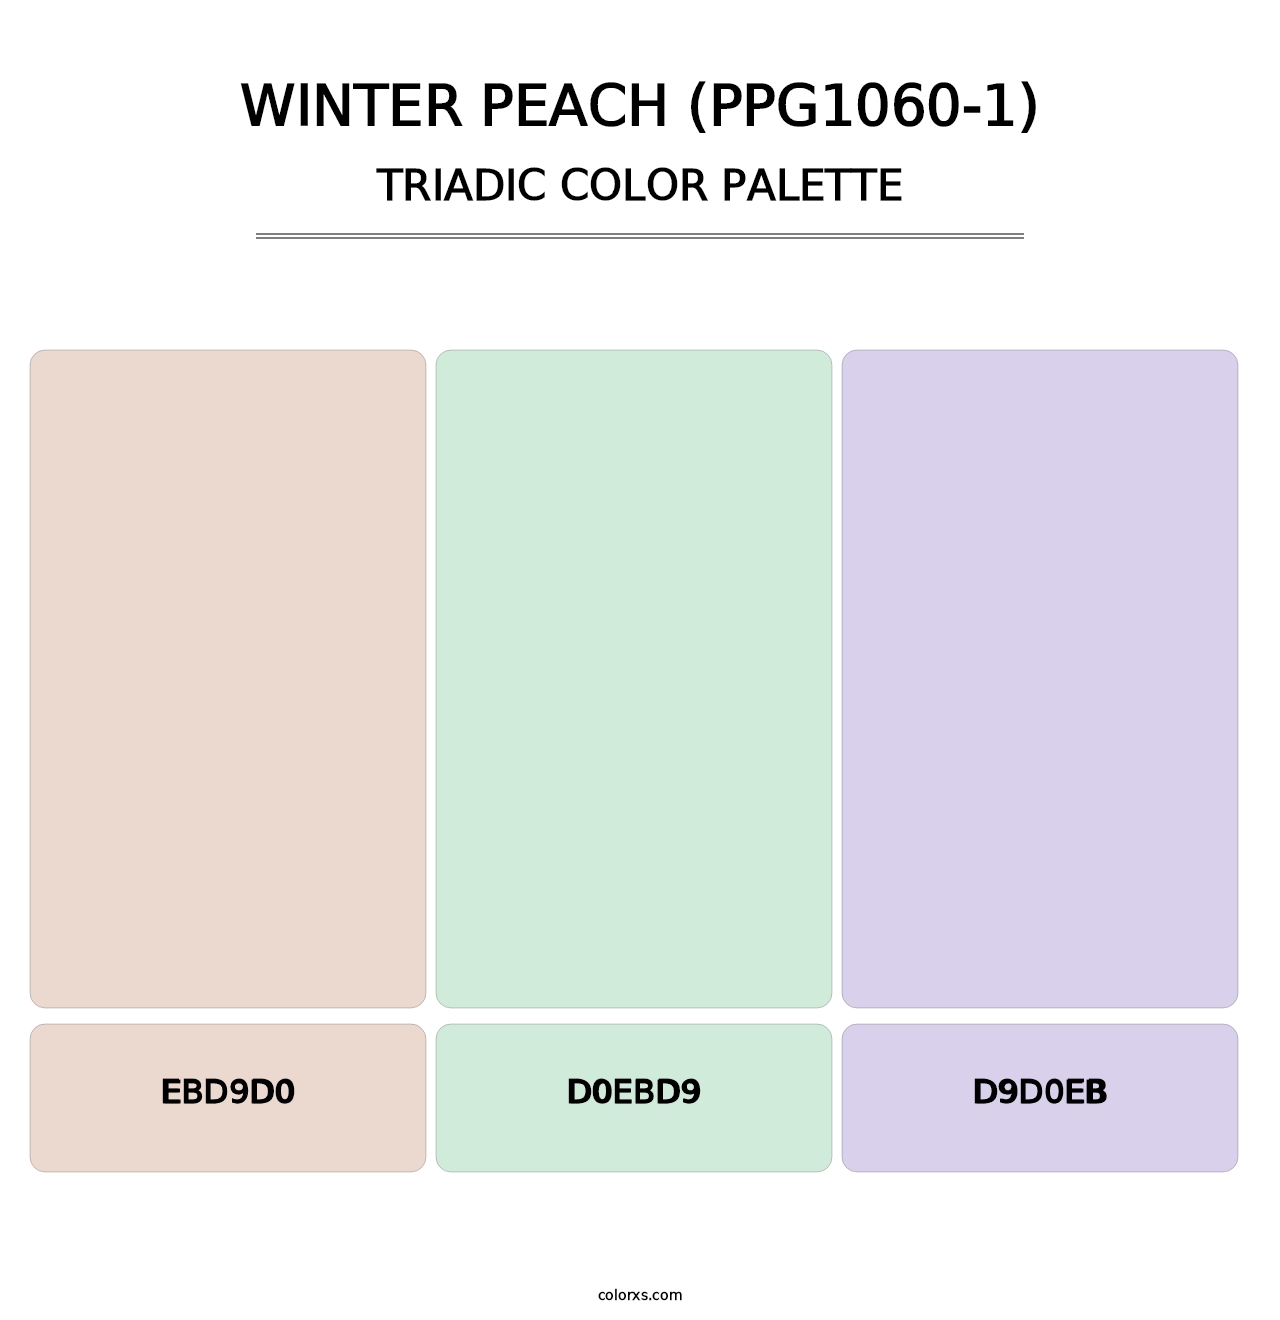 Winter Peach (PPG1060-1) - Triadic Color Palette